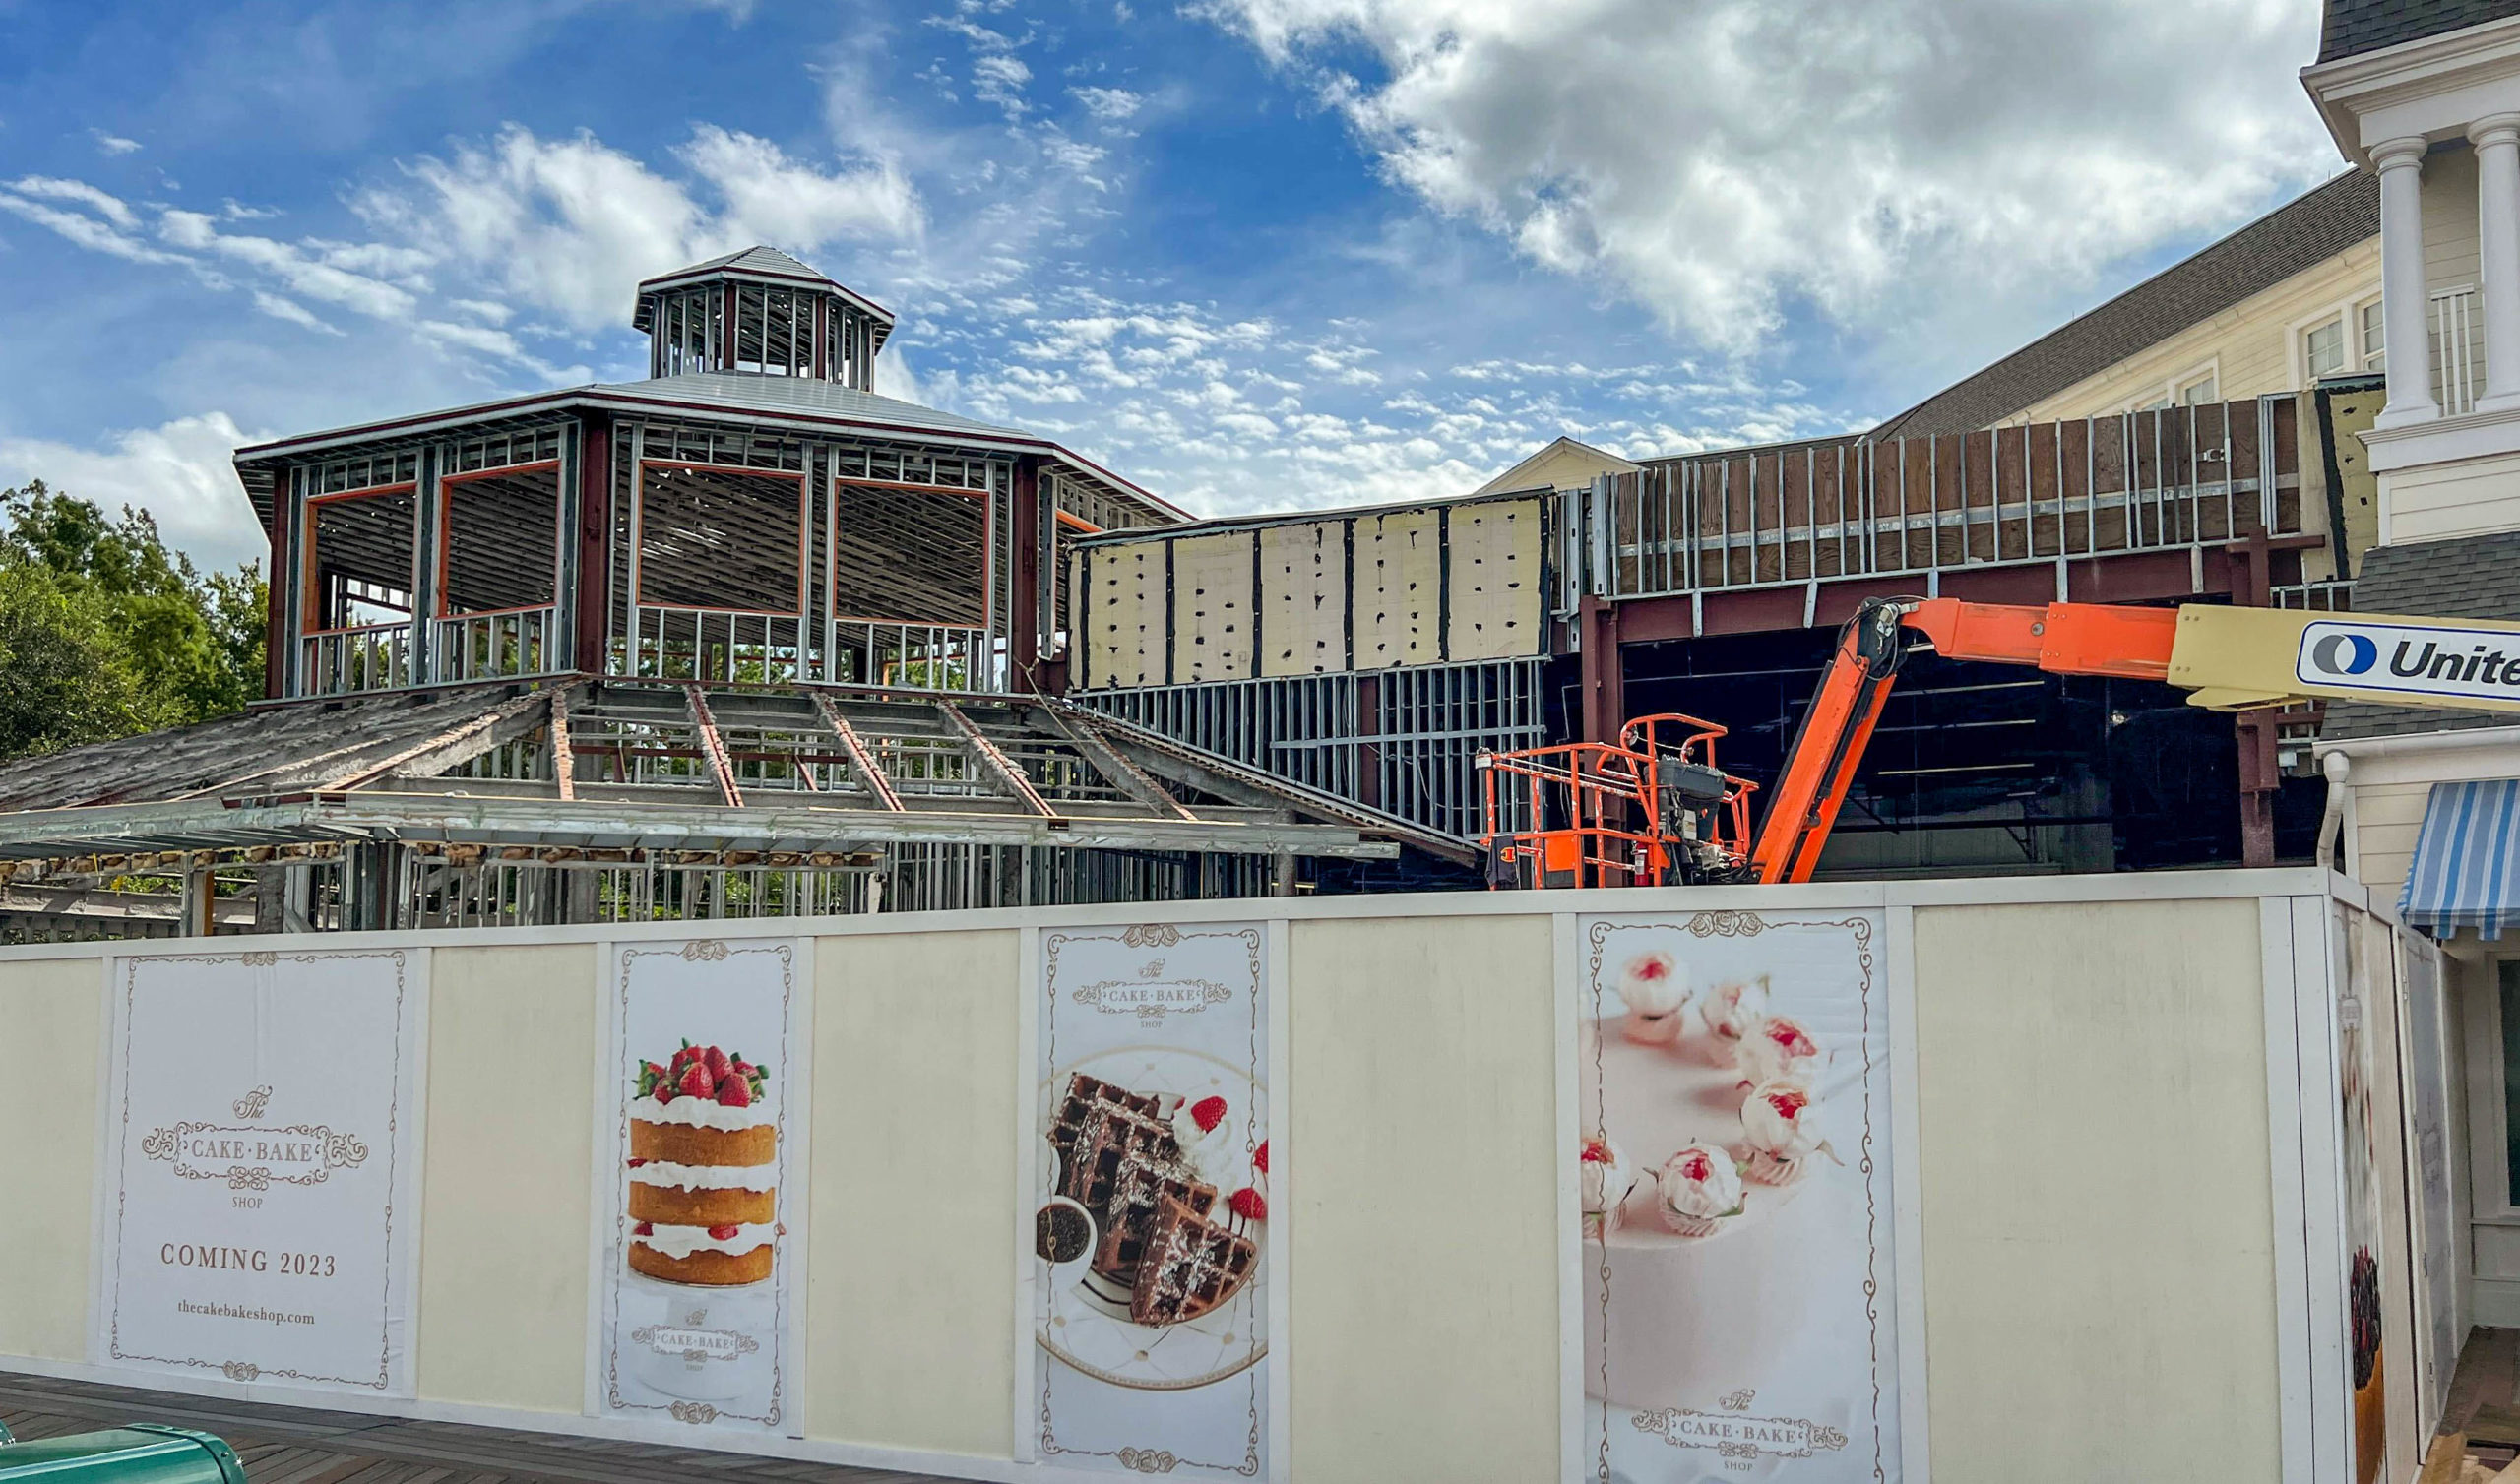 2023 Wdw Disneys Boardwalk Cake Bake Shop Construction 3 Scaled 